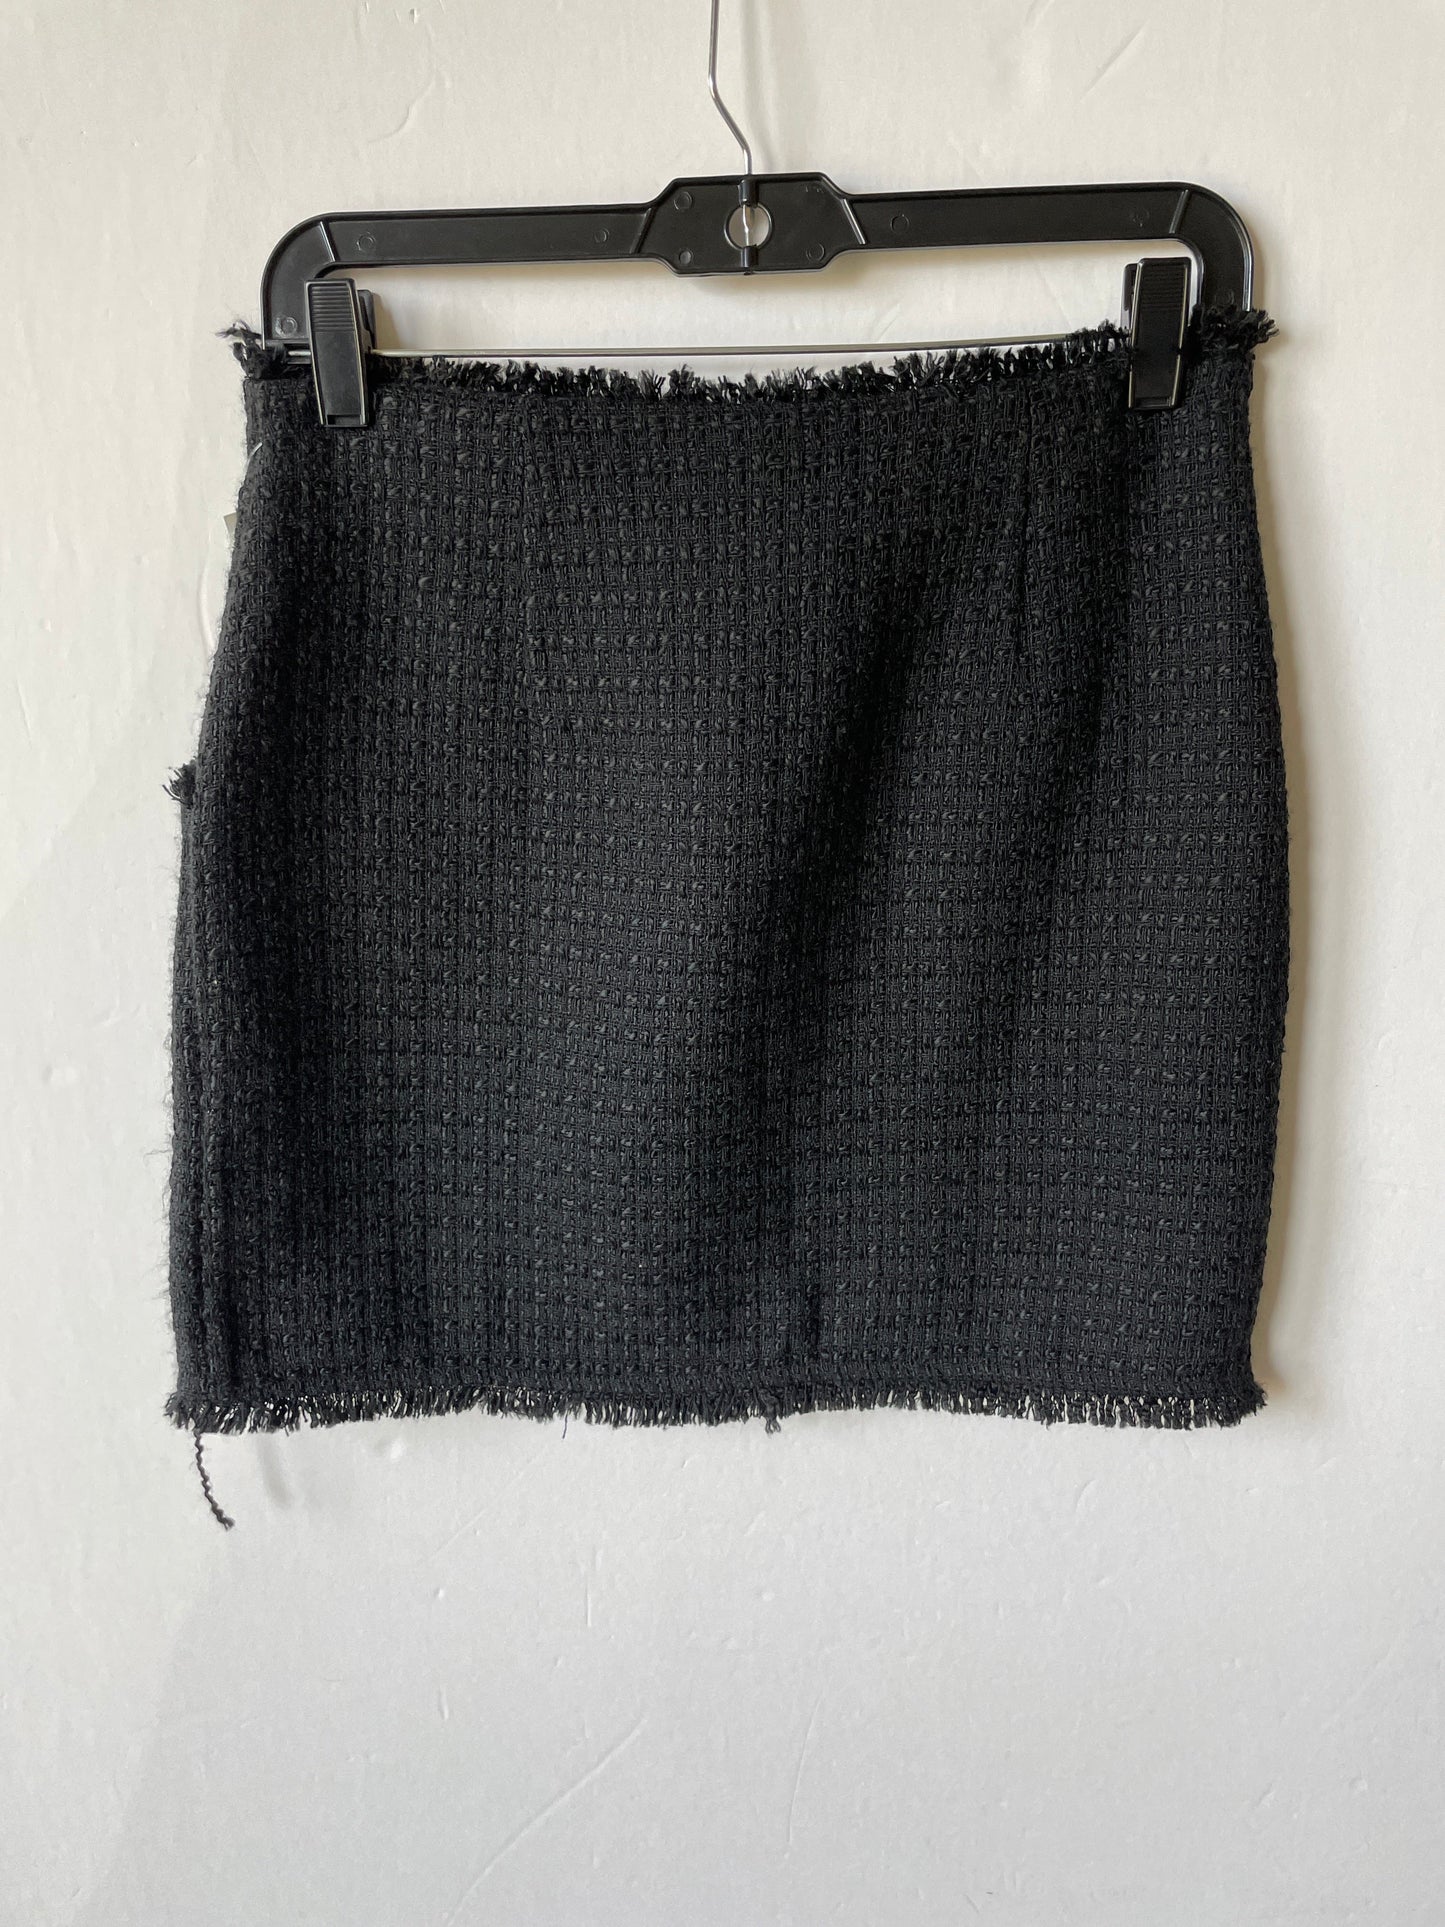 Skirt Mini & Short By Maeve  Size: 2